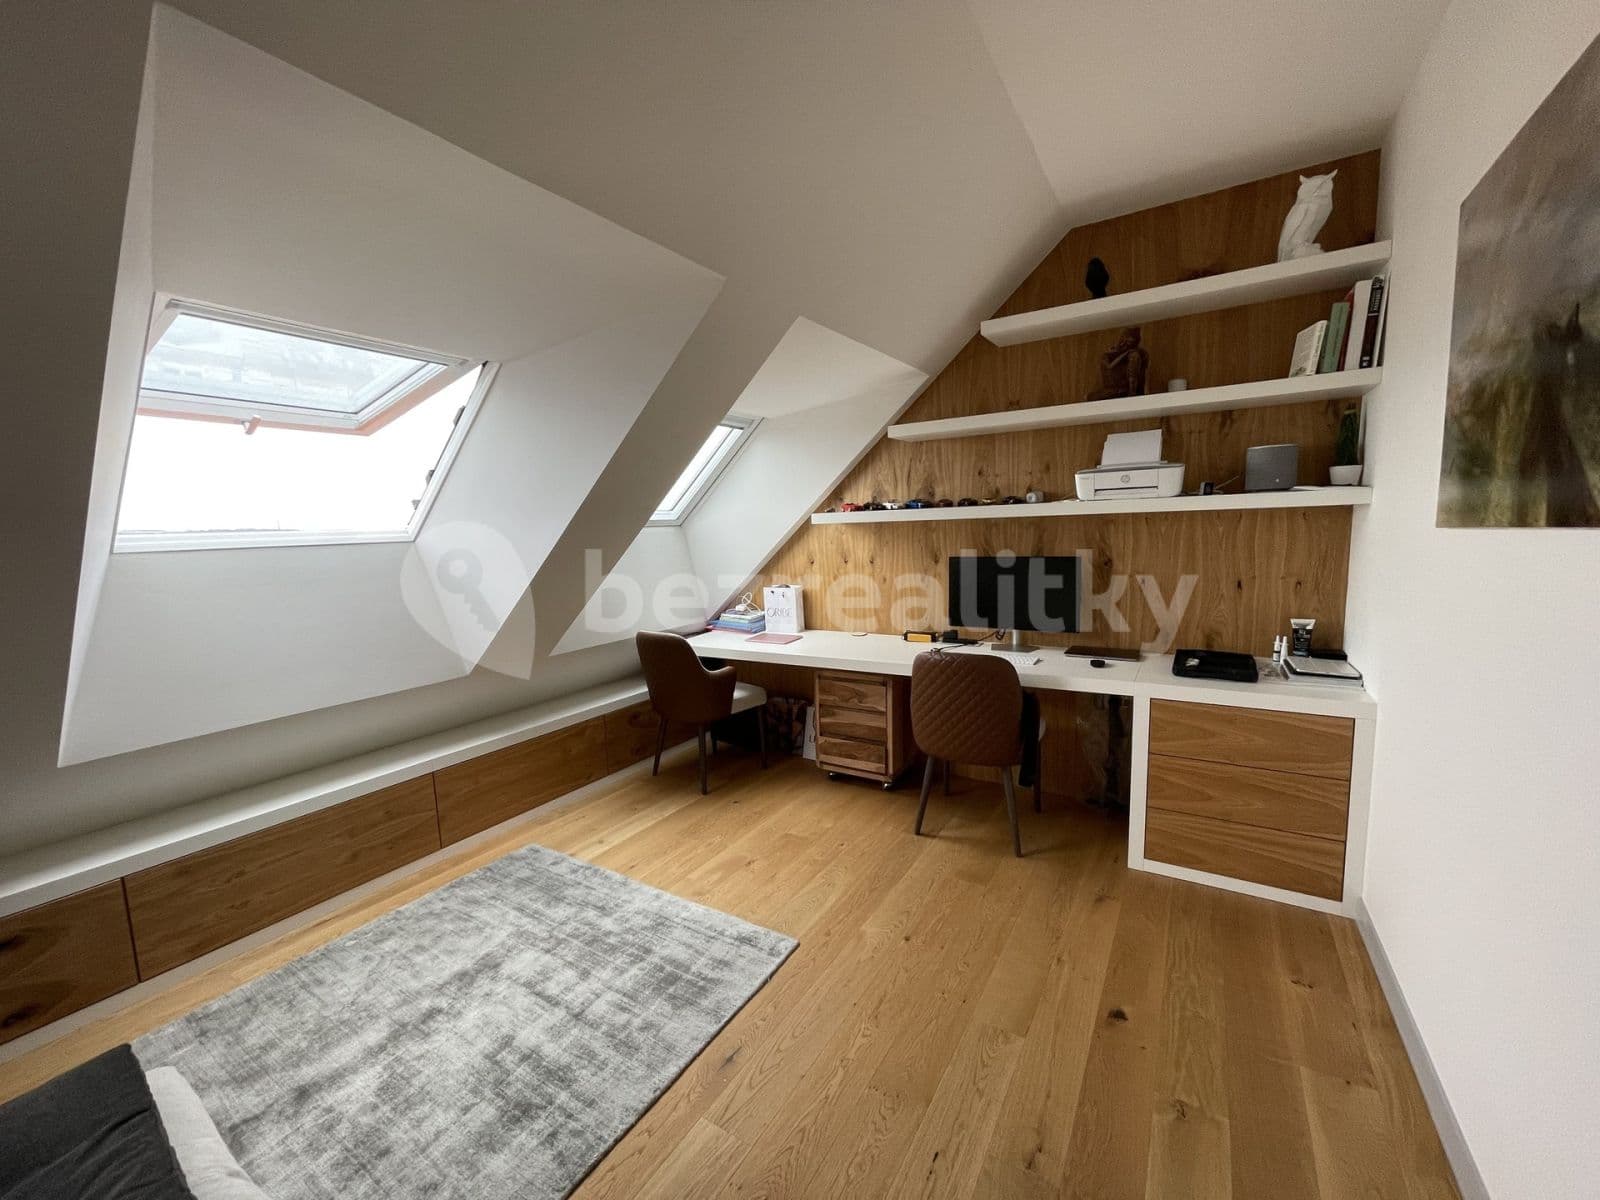 3 bedroom with open-plan kitchen flat to rent, 115 m², Budečská, Prague, Prague